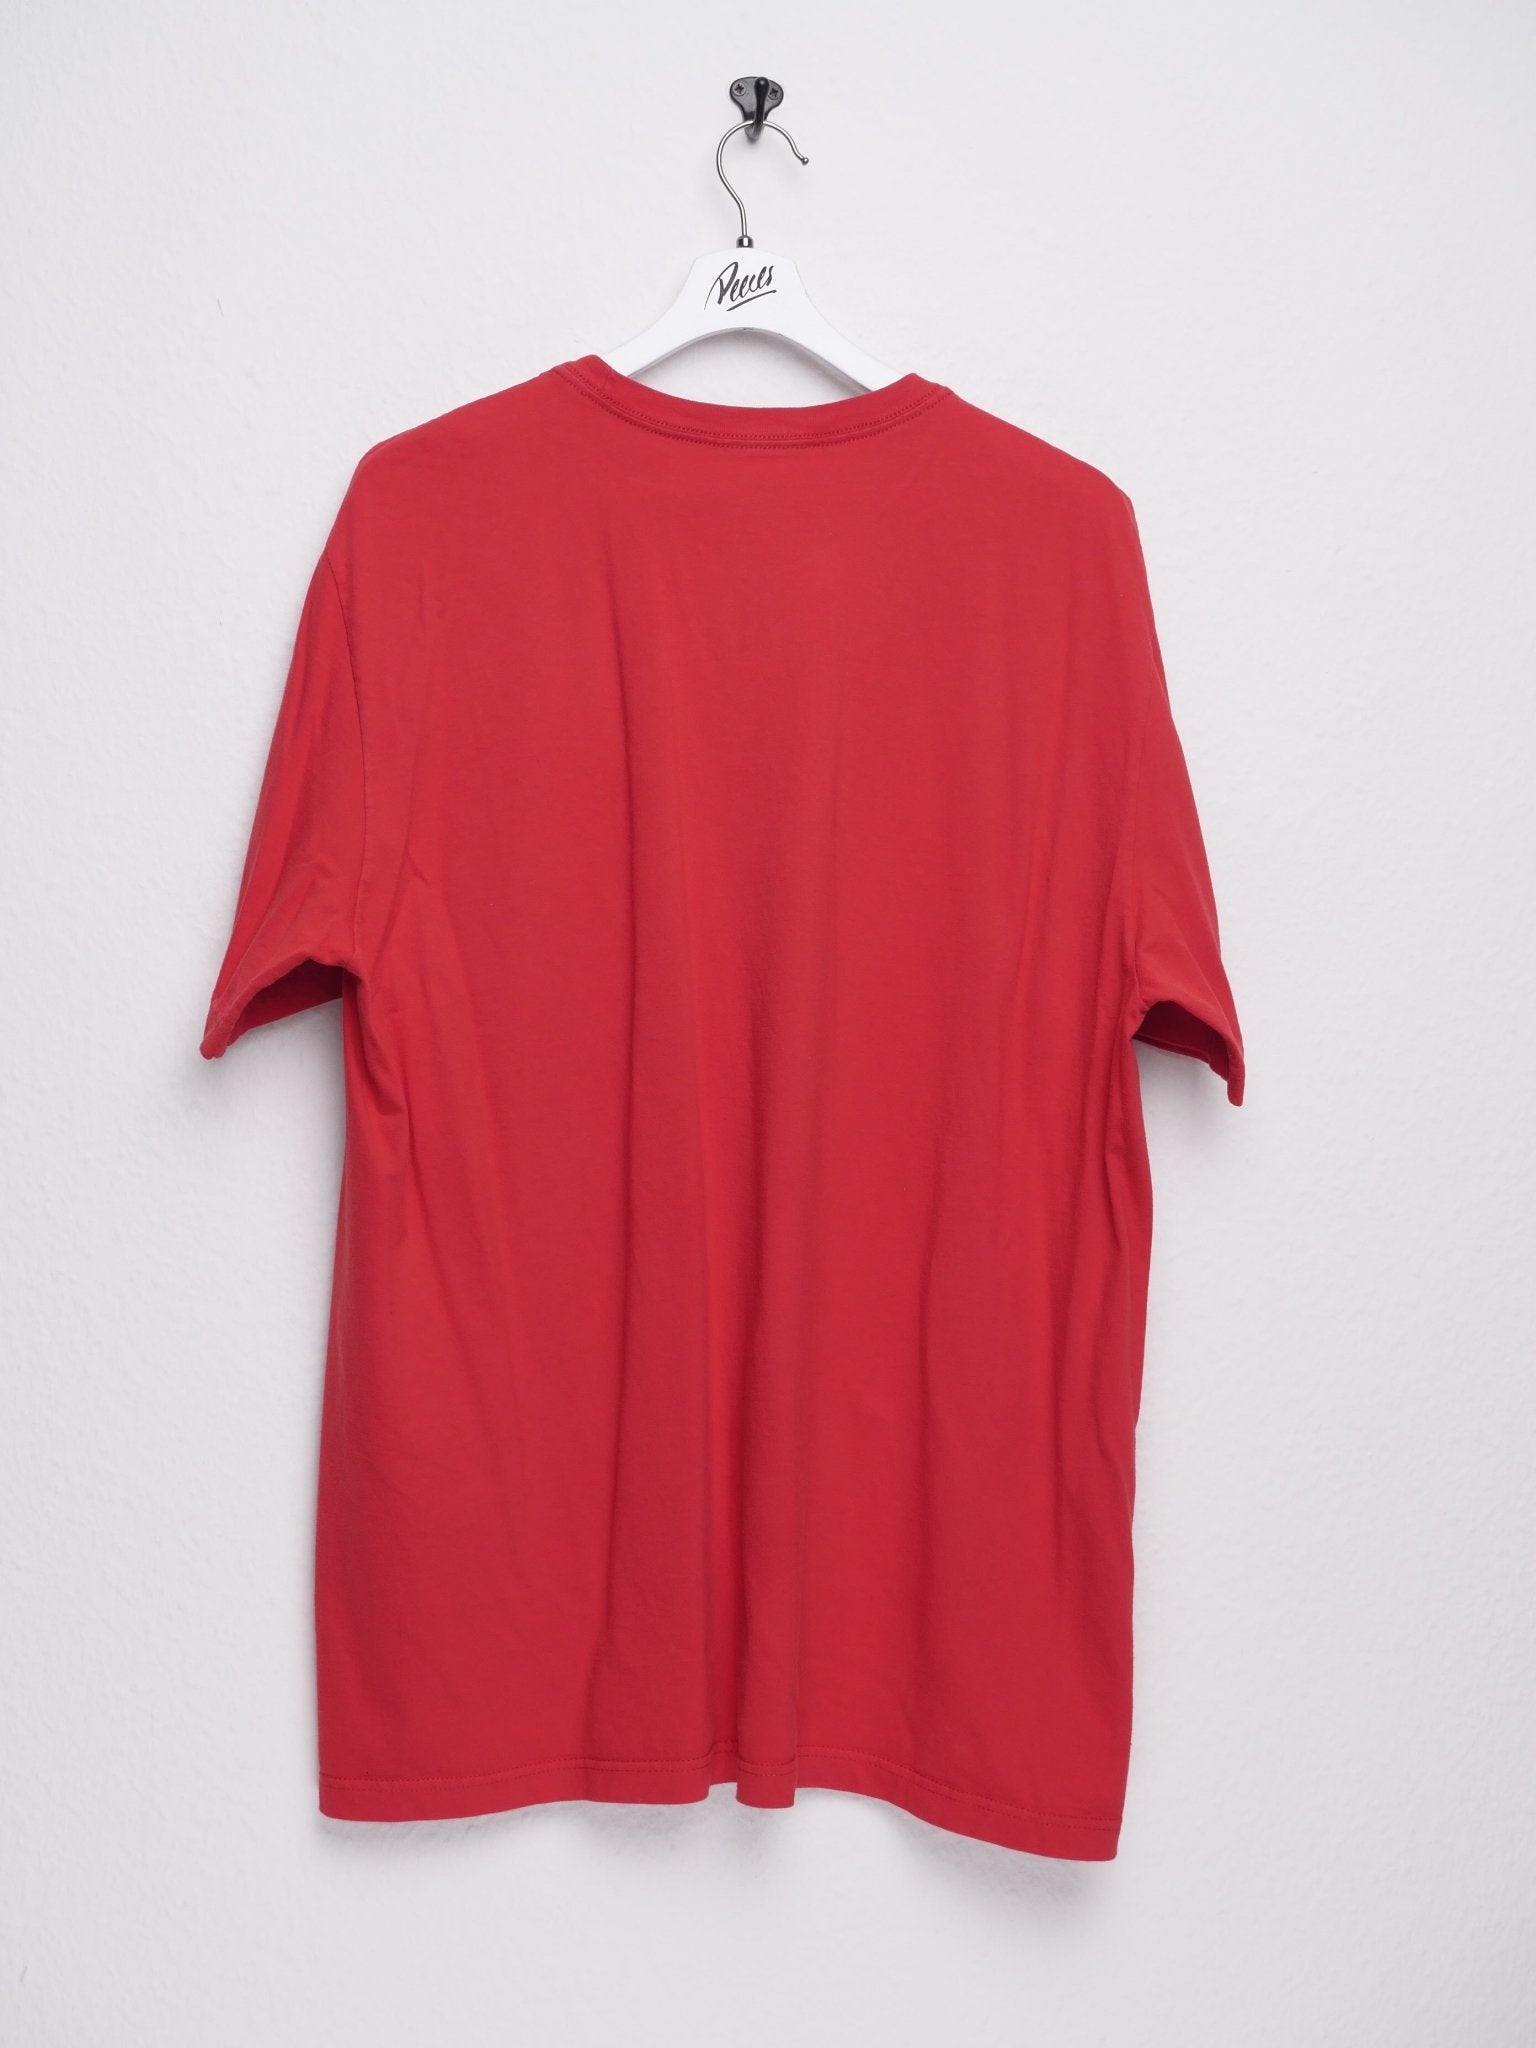 nike printed Swoosh 'USA' red Shirt - Peeces